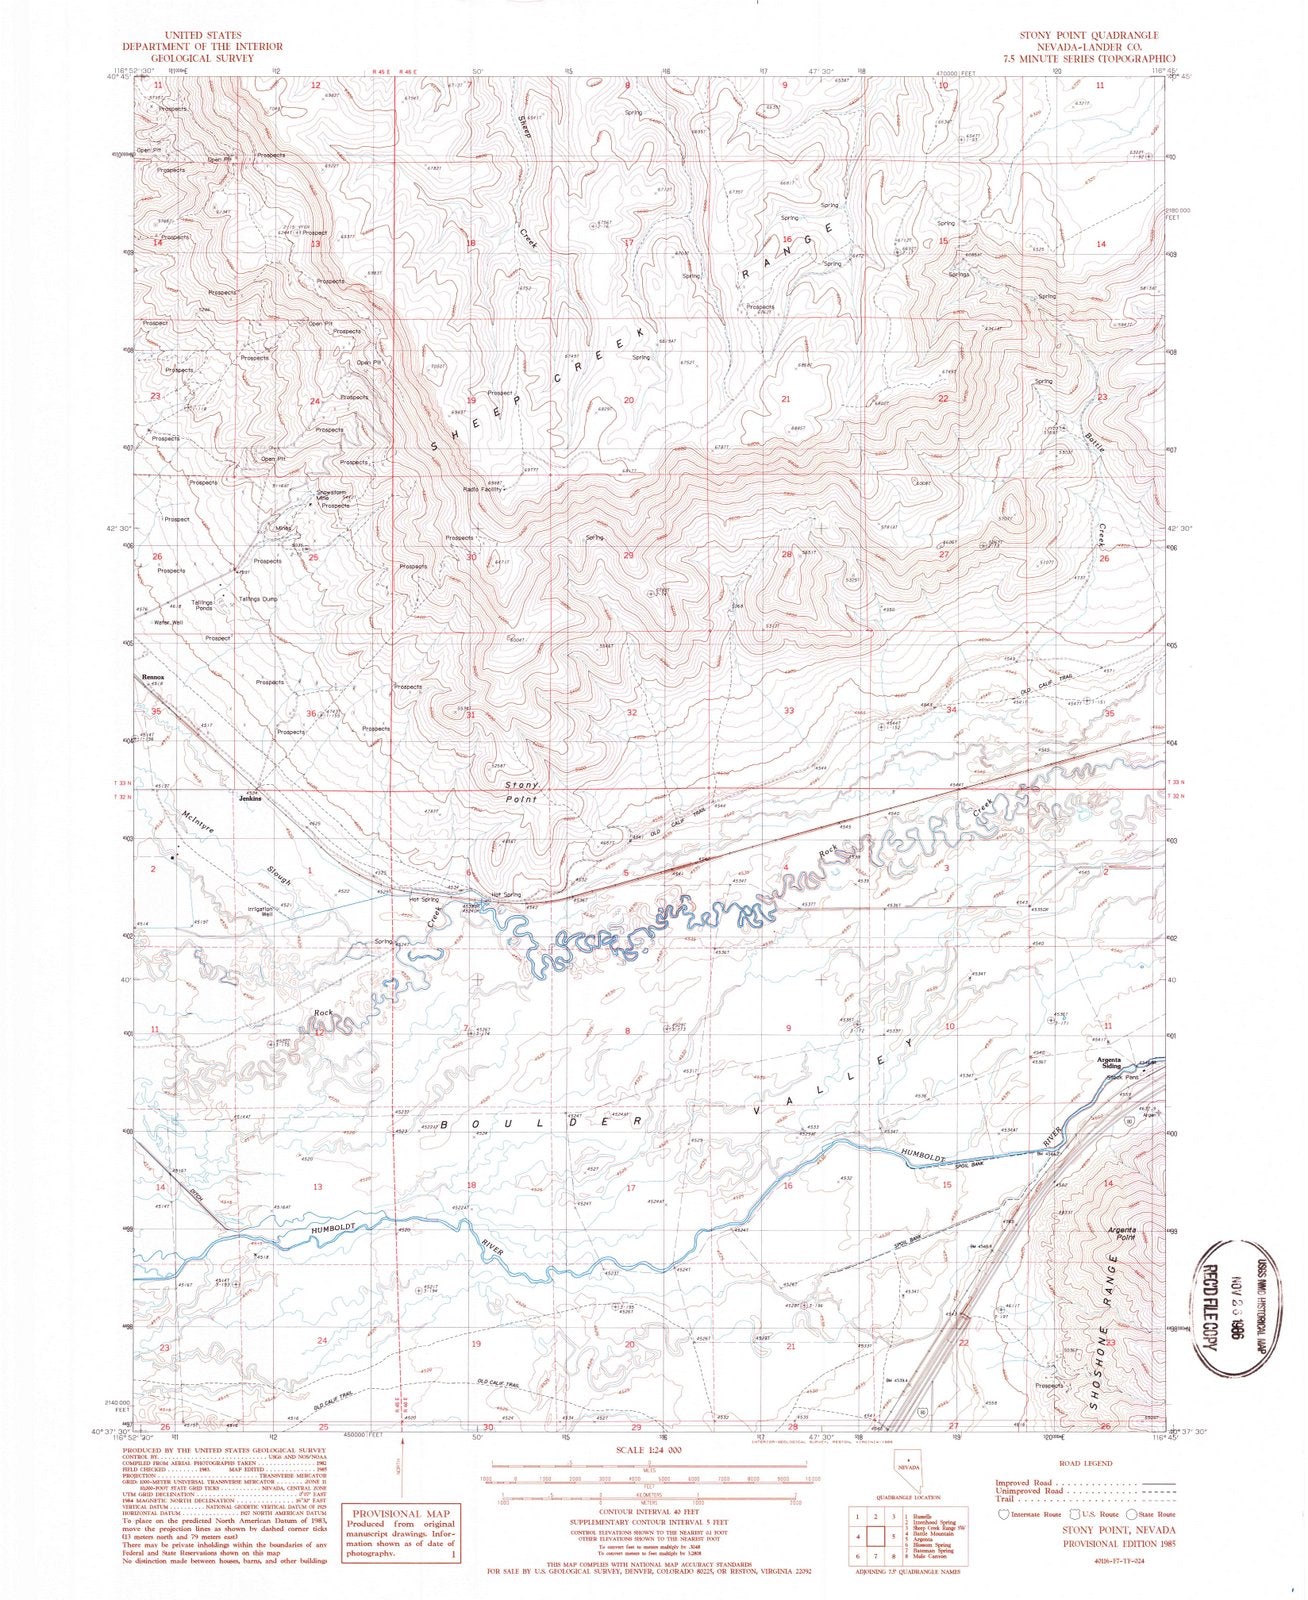 1985 Stony Point, NV - Nevada - USGS Topographic Map